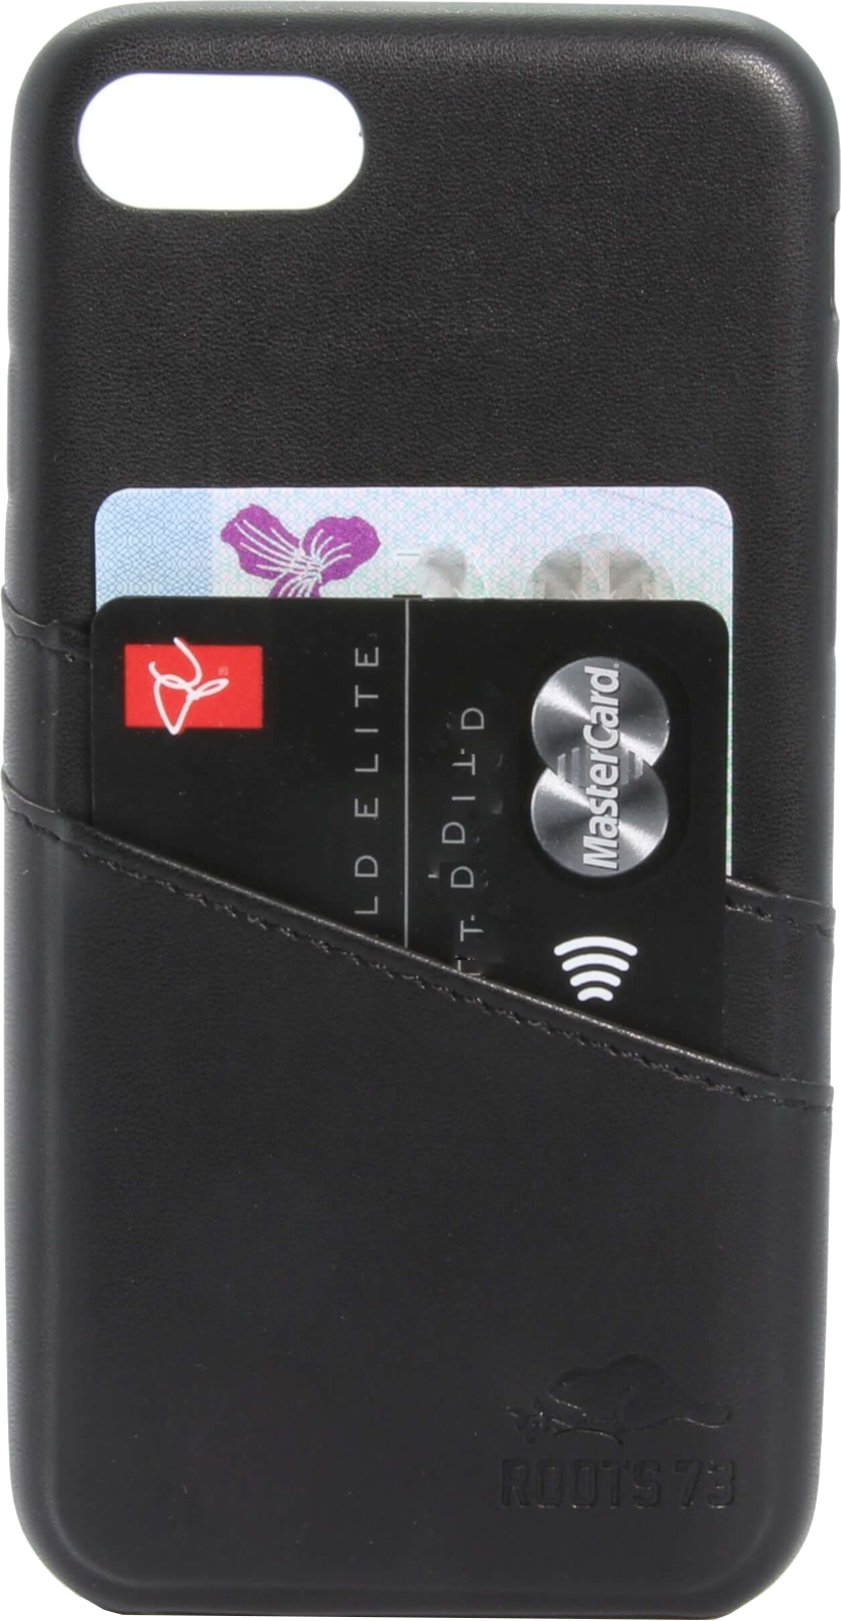 iPhone 8/7/6 Slim Case with 2 Card Slots - Black